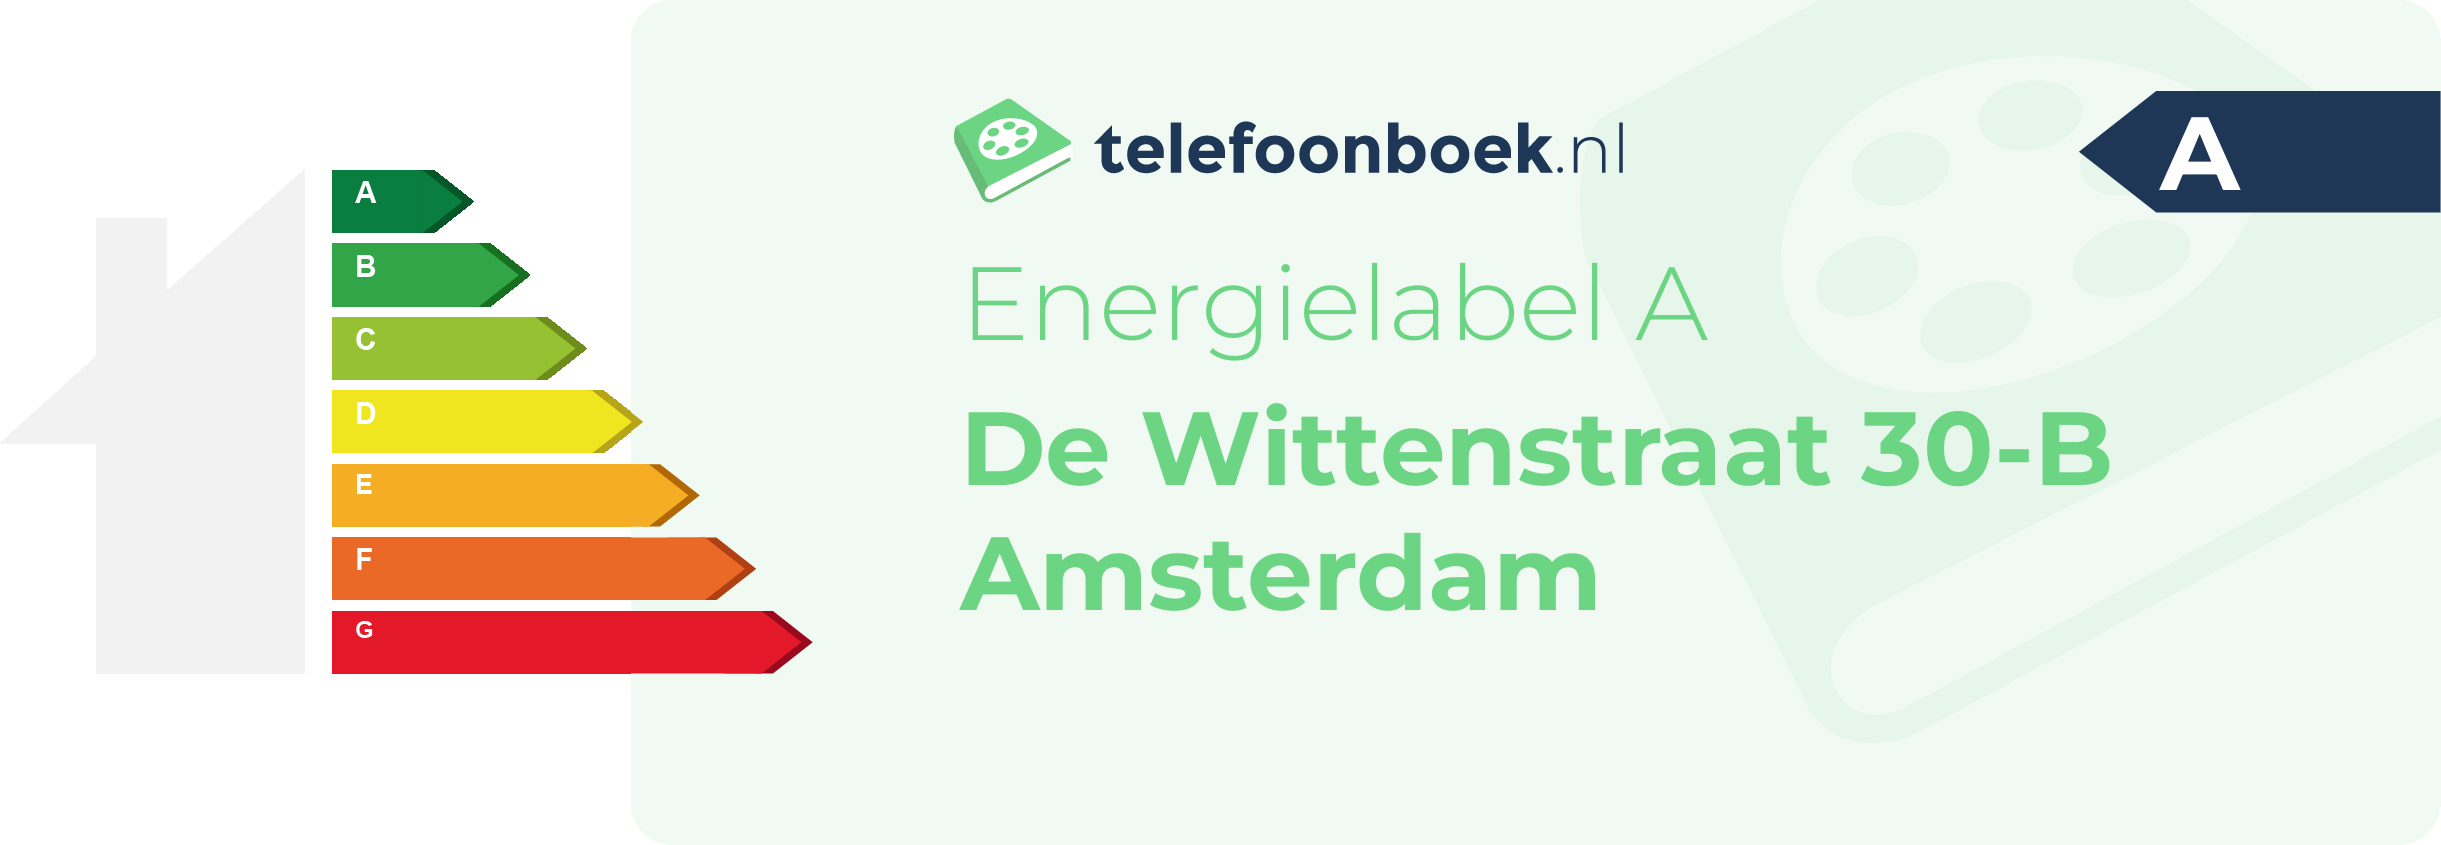 Energielabel De Wittenstraat 30-B Amsterdam